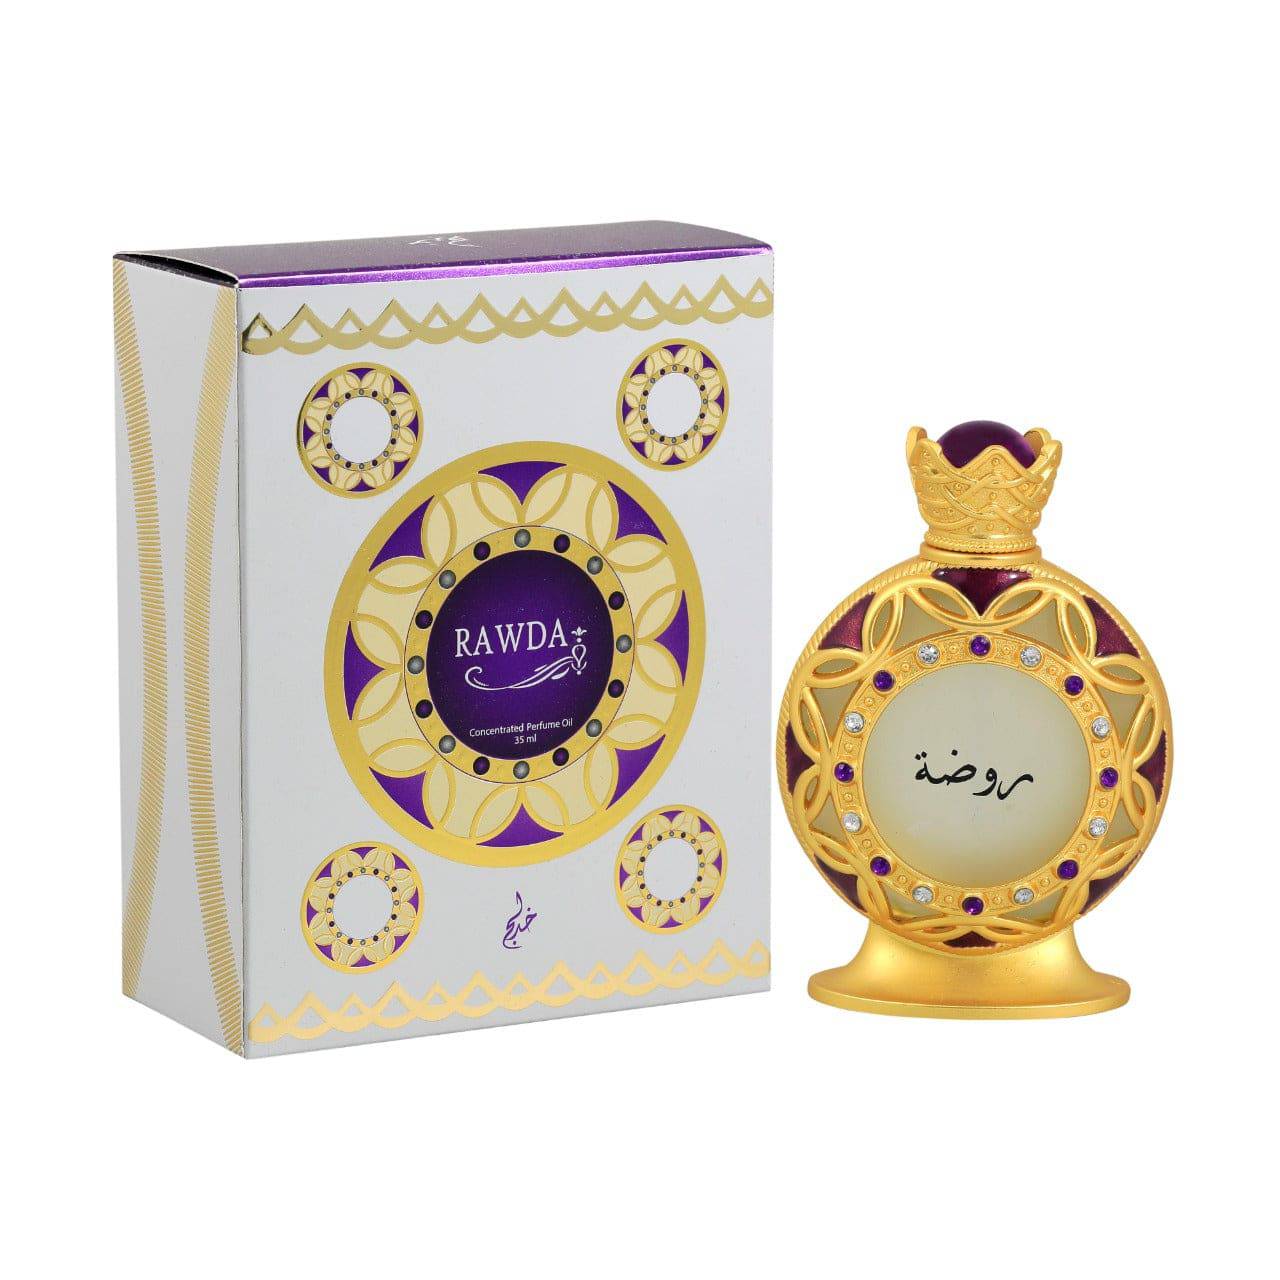 Rawda Gold Perfume Oil - 35 mL (1.18 oz) by Khadlaj - Intense oud